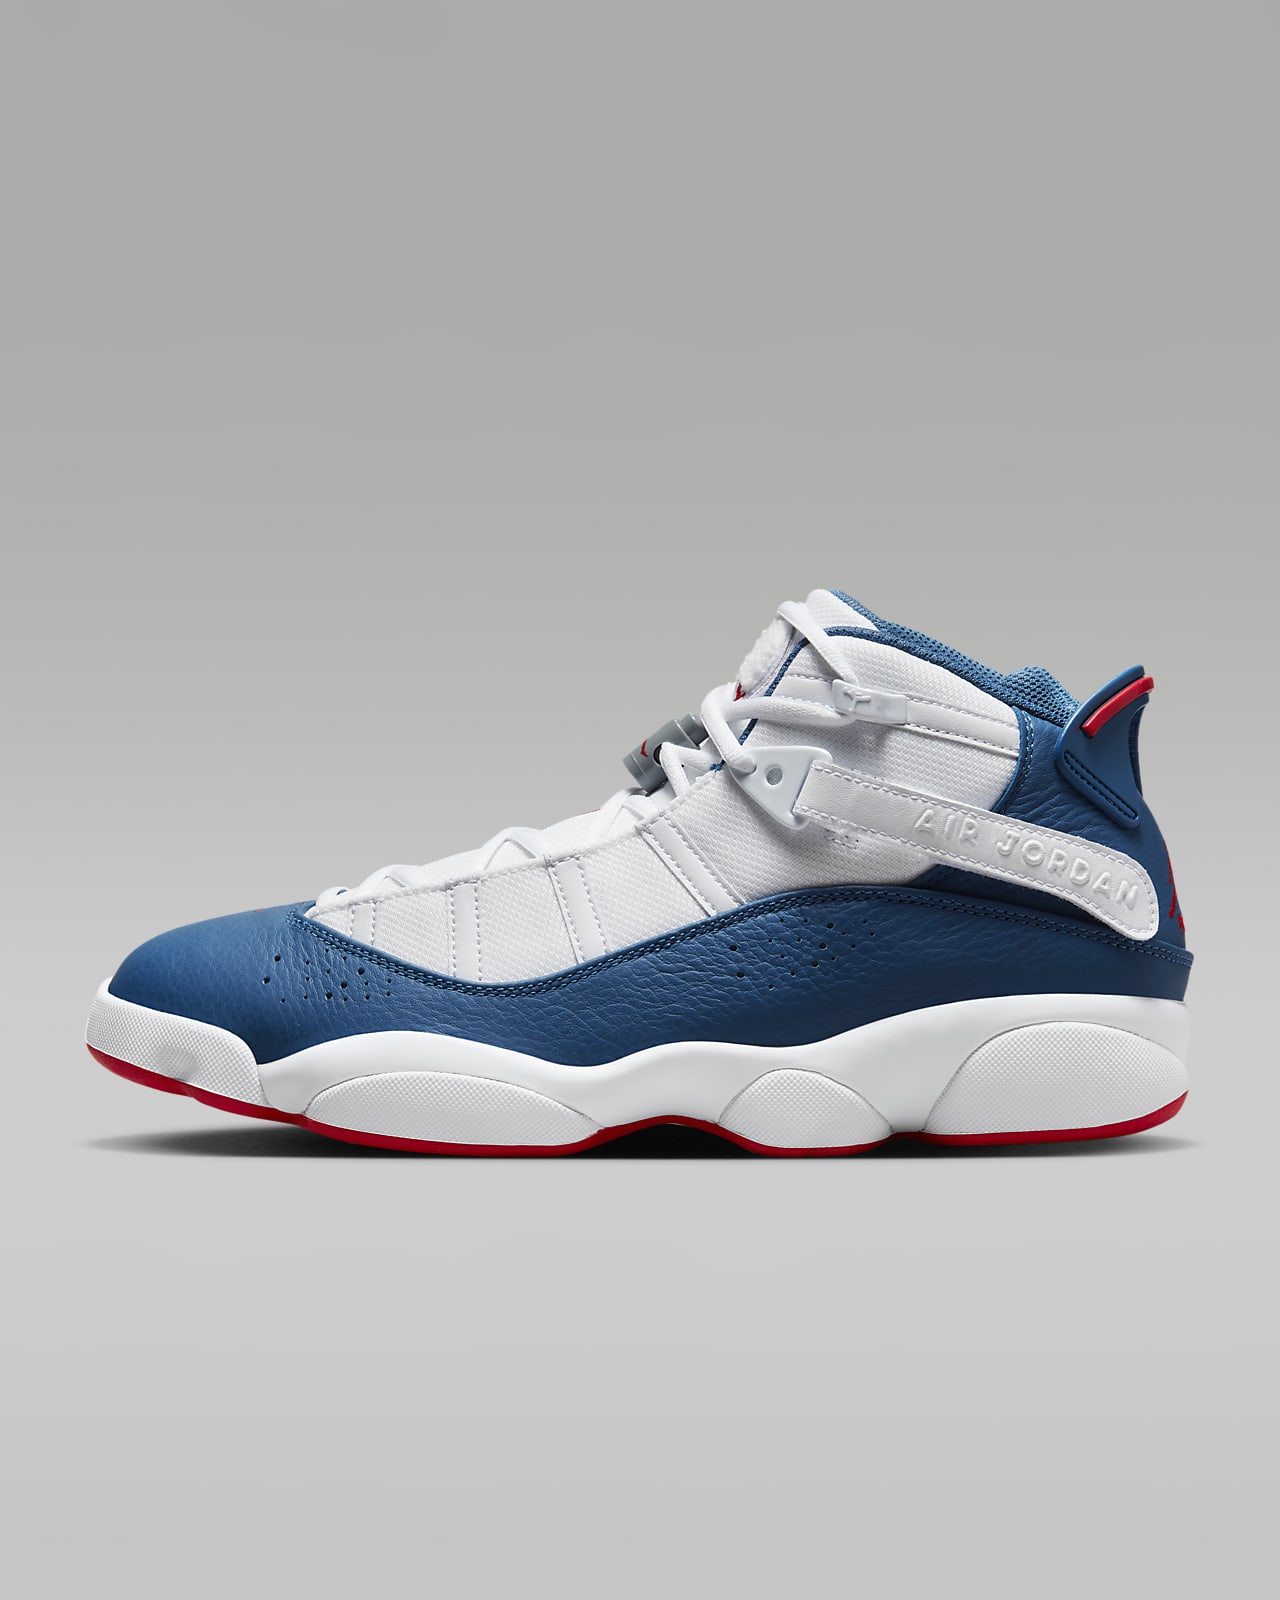 HAPPIER THAN EVER Nike Air Jordans concept. : r/Sneakers